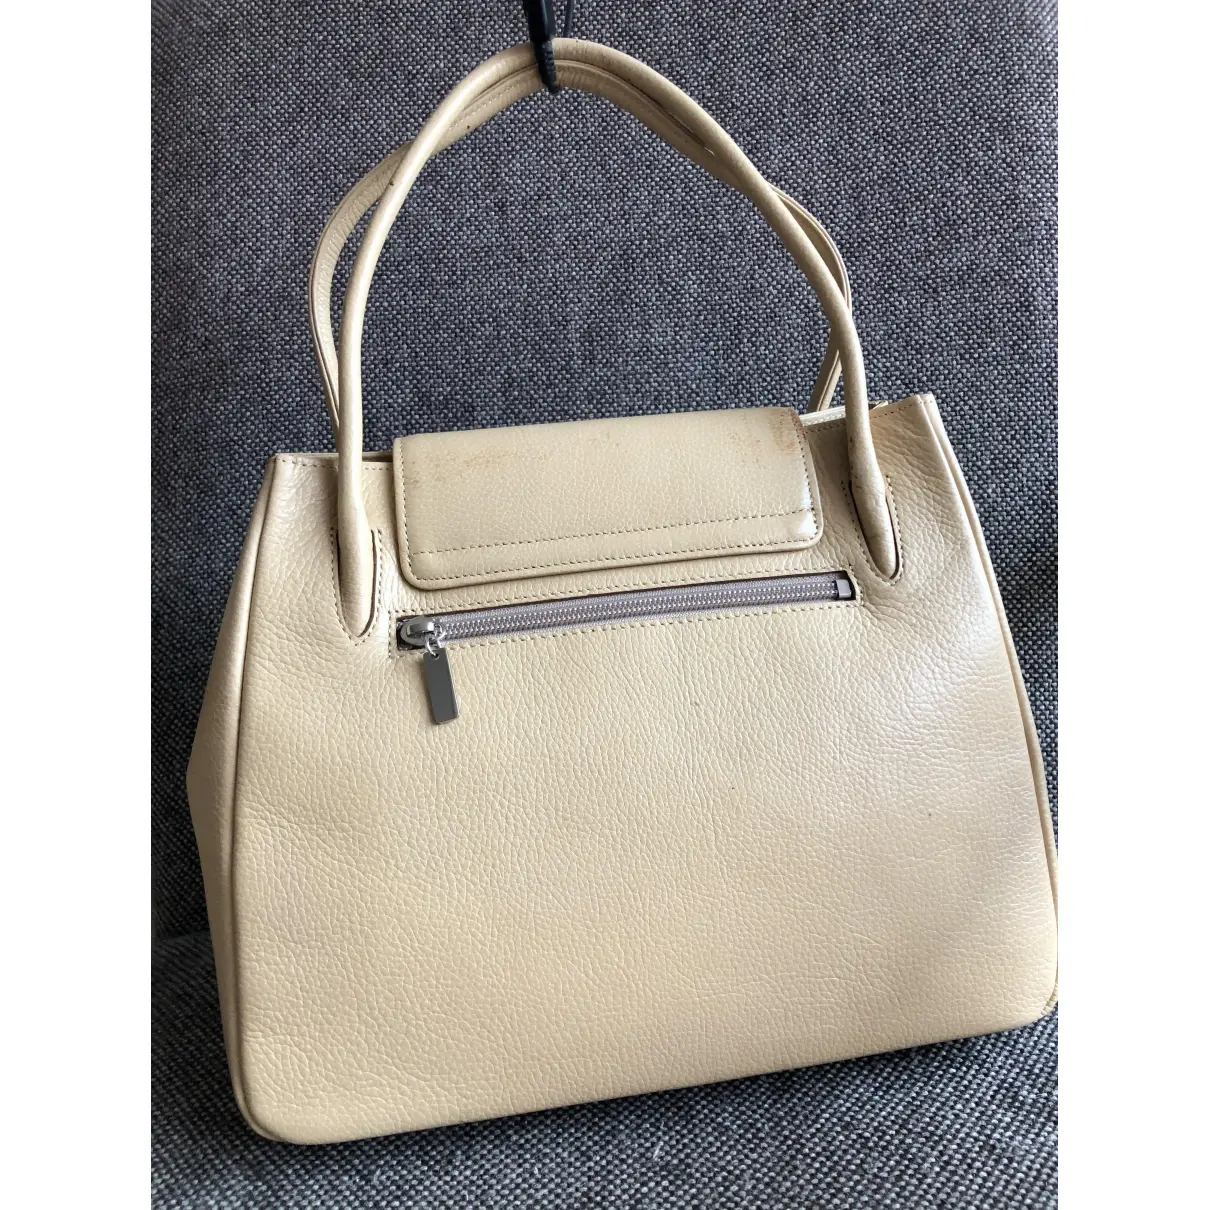 Buy Sonia Rykiel Leather handbag online